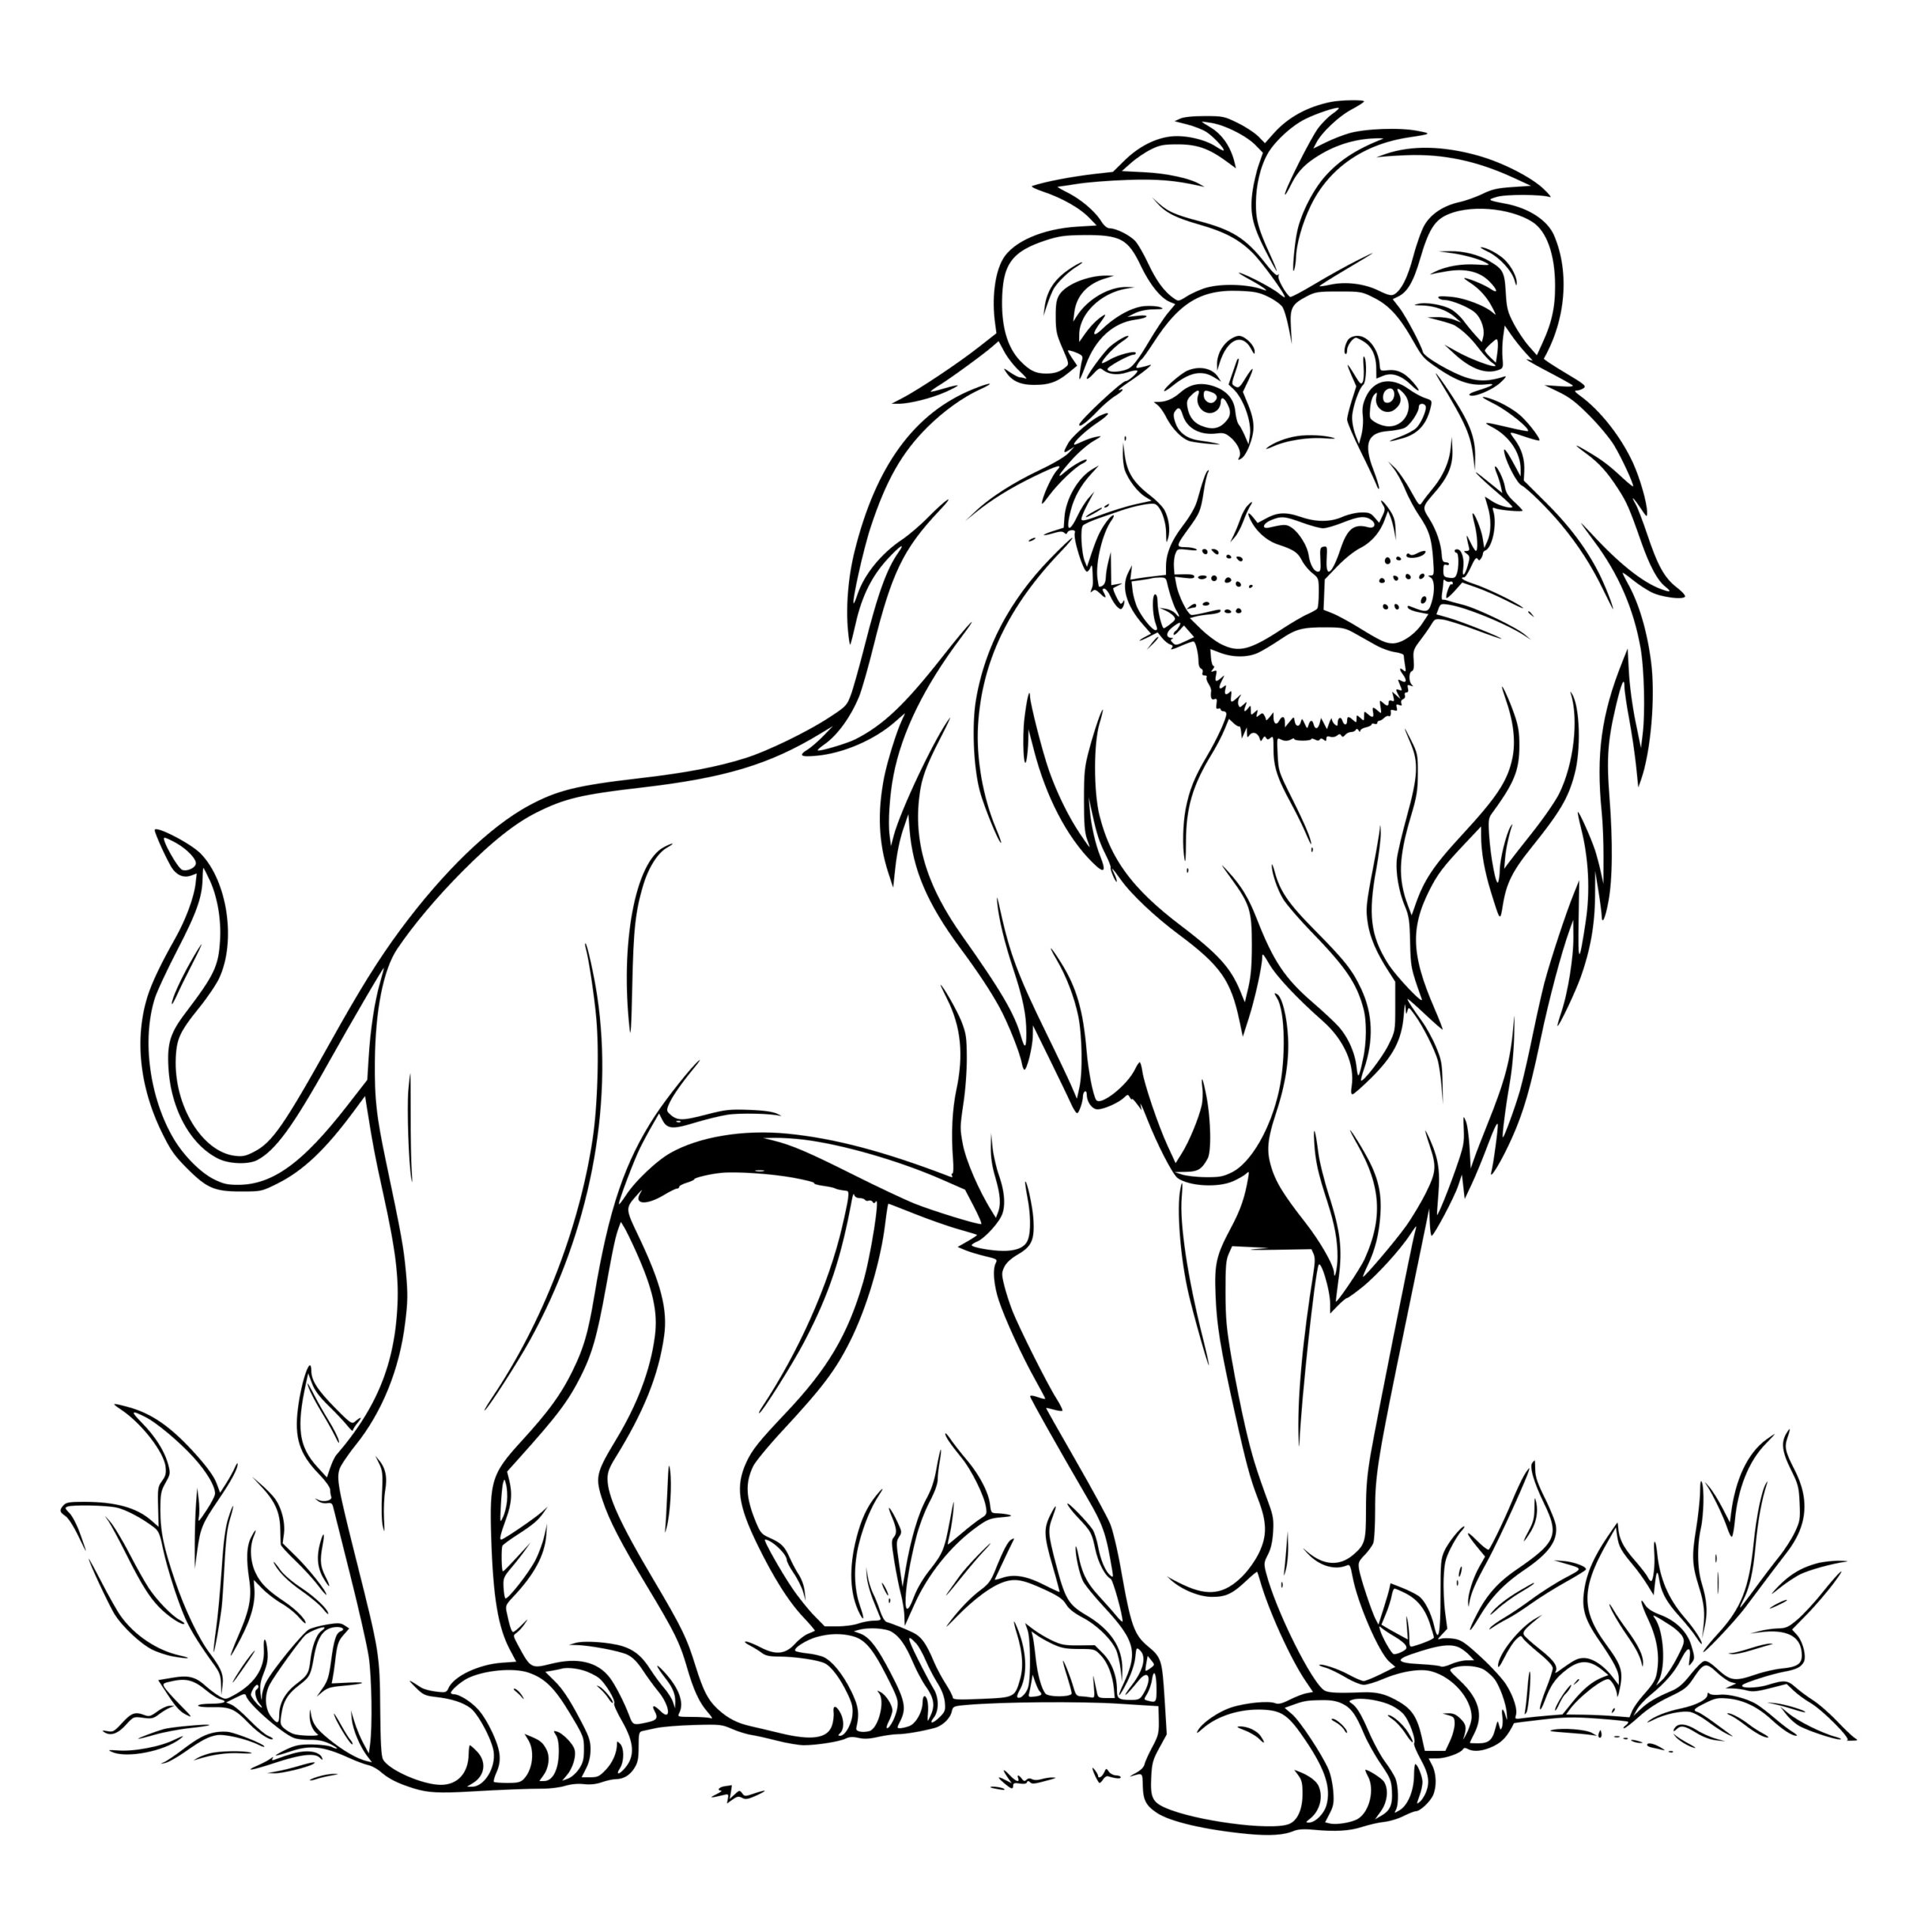 Roaming Lion SVG File for Cricut, Silhouette, Laser Machines